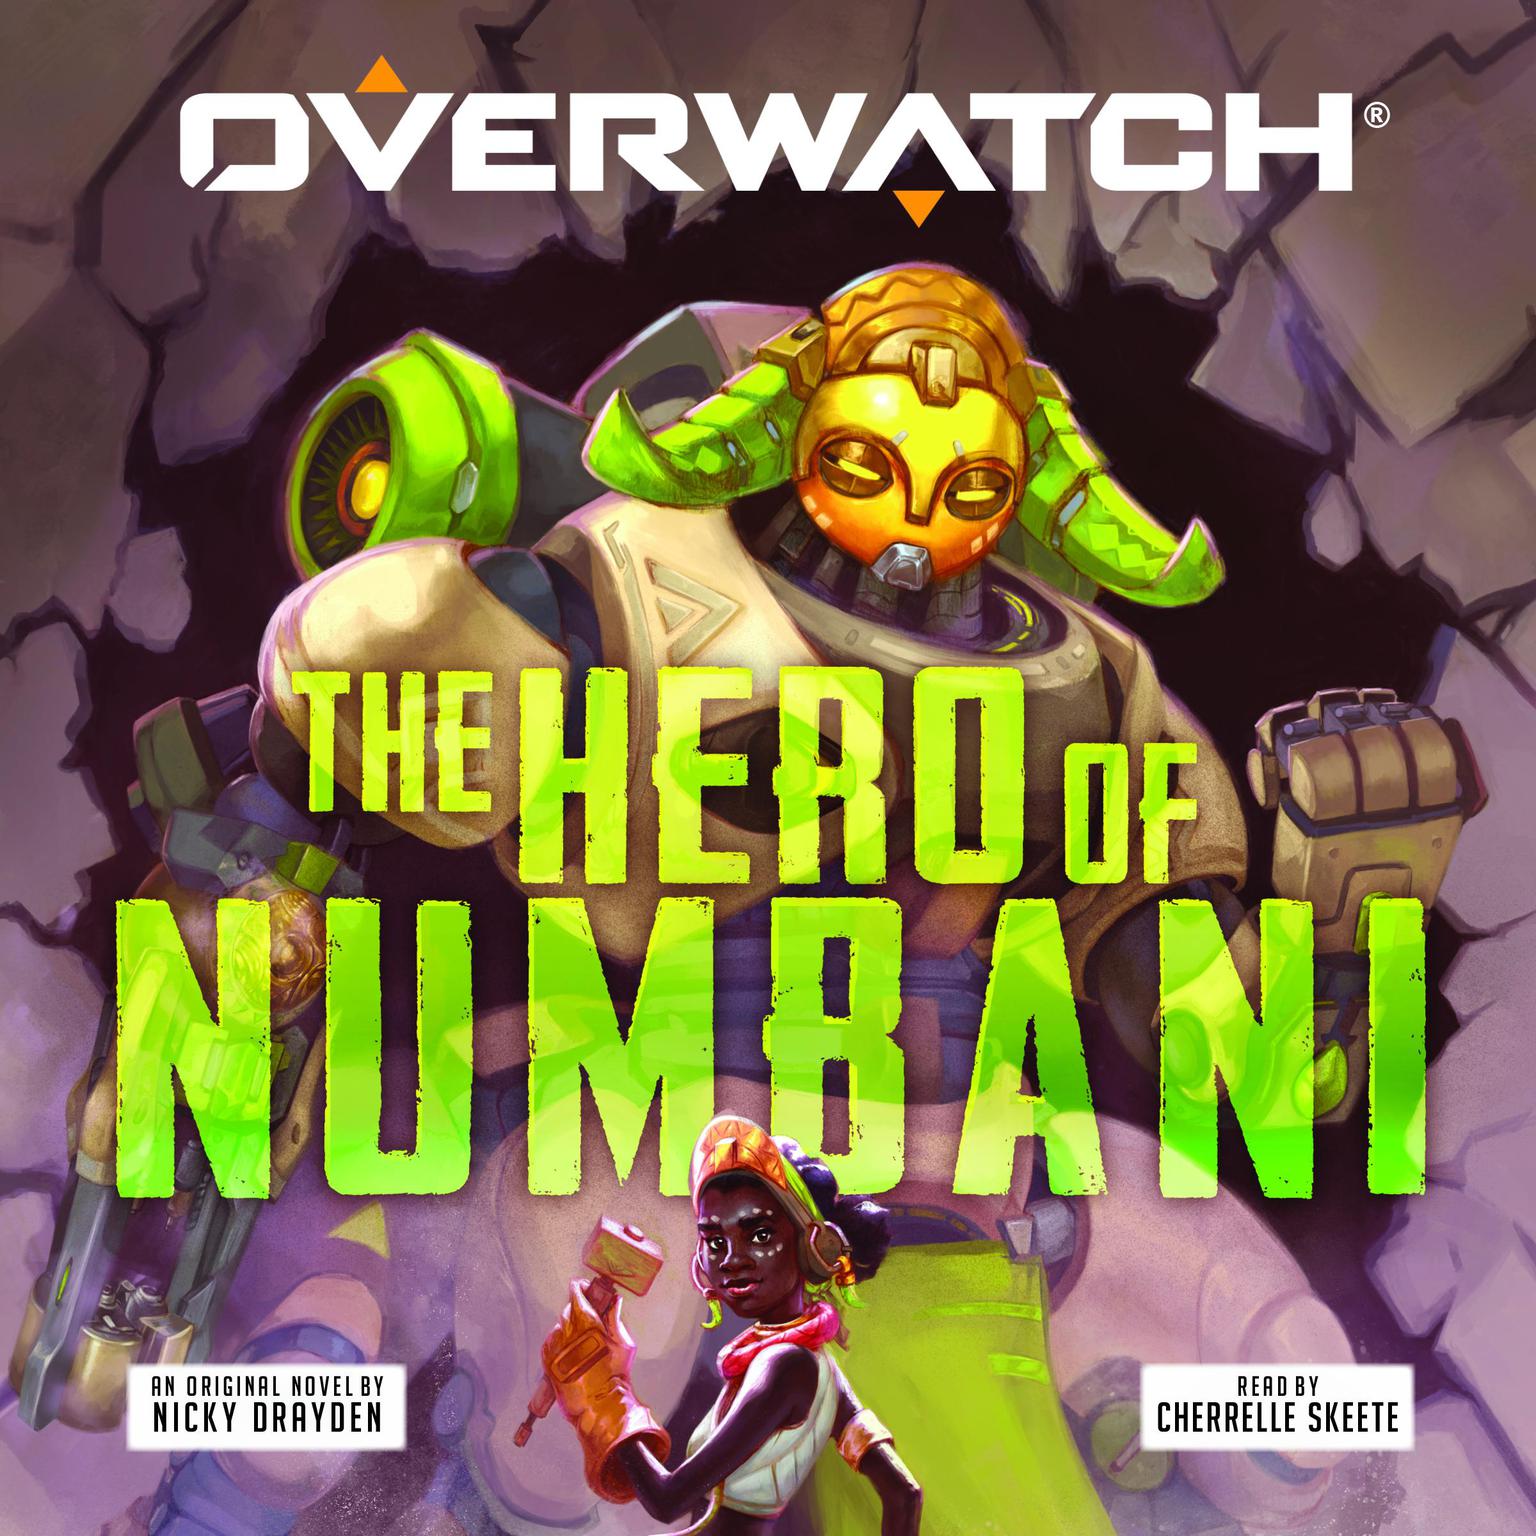 The Hero of Numbani (Overwatch #1) Audiobook, by Nicky Drayden